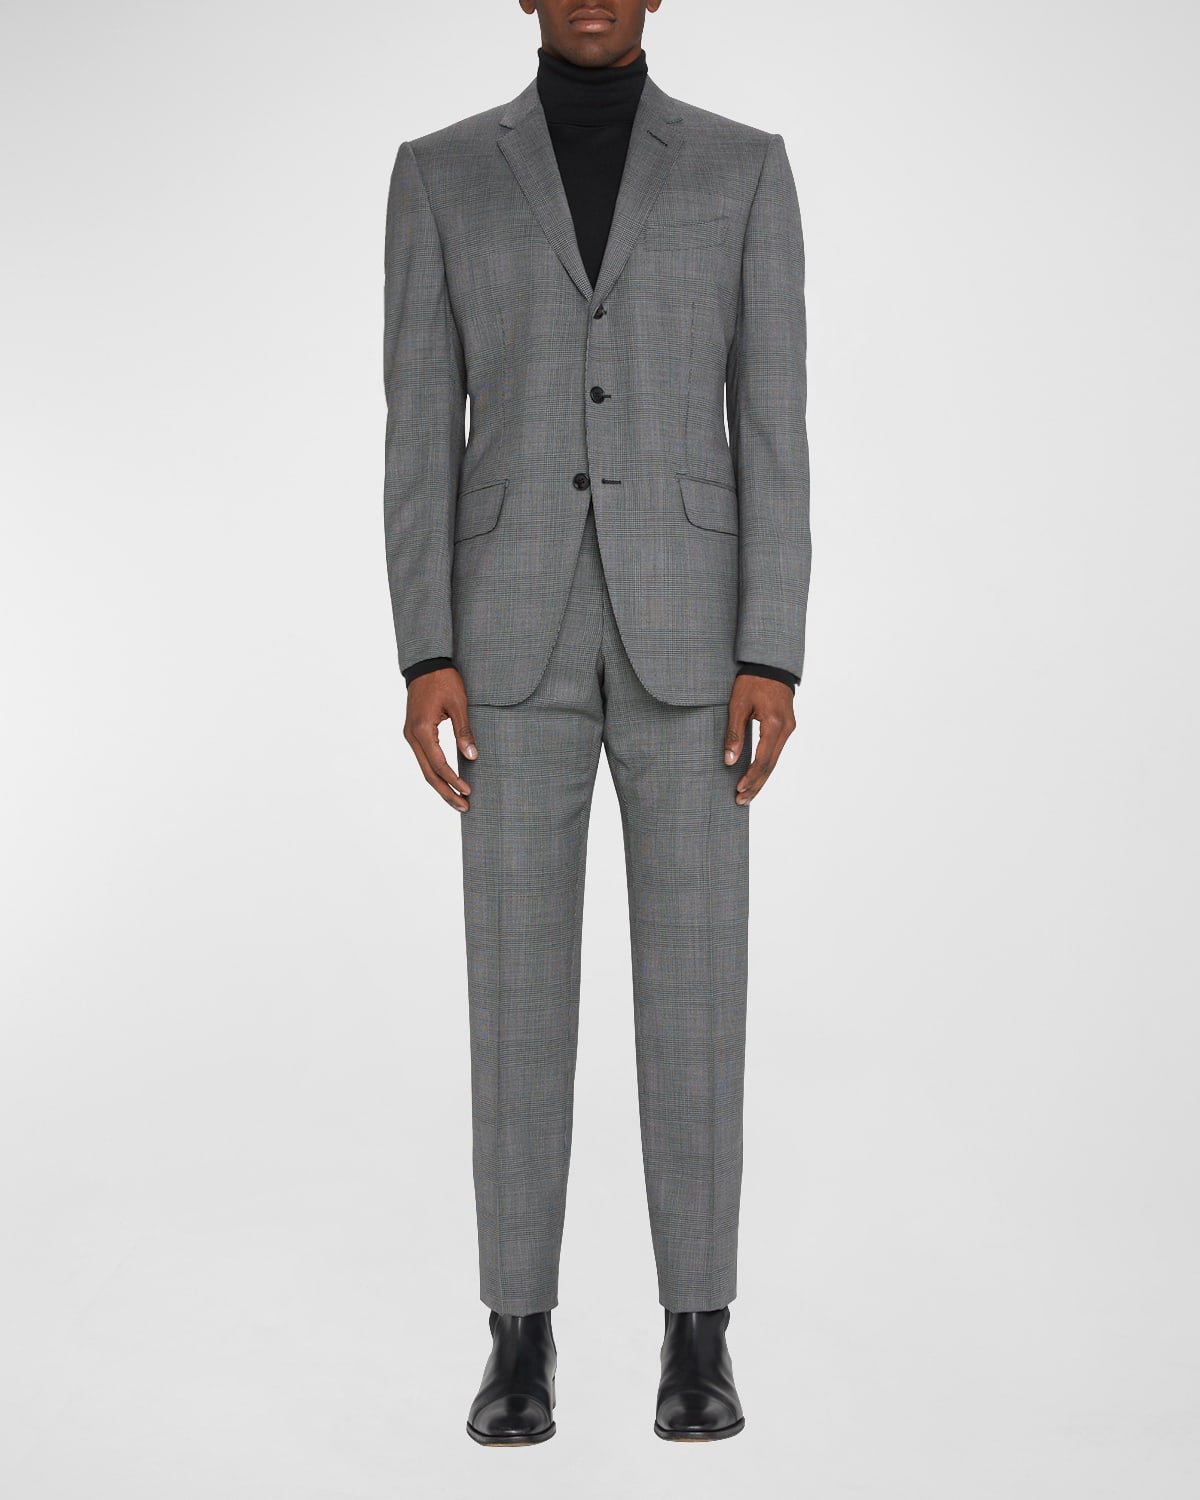 Tom Ford Suit | Neiman Marcus